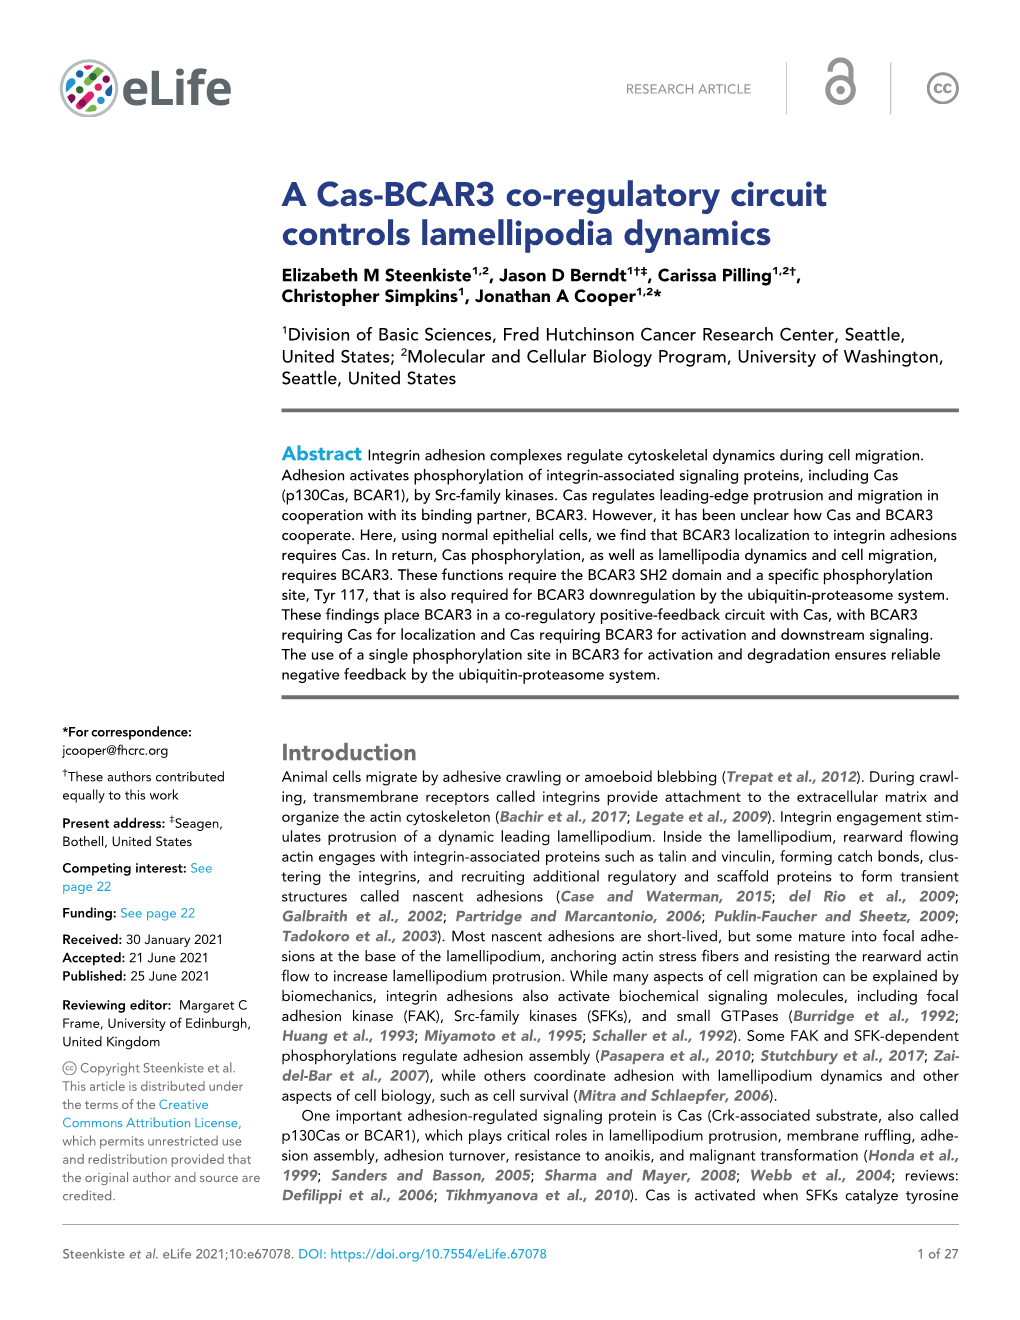 A Cas-BCAR3 Co-Regulatory Circuit Controls Lamellipodia Dynamics